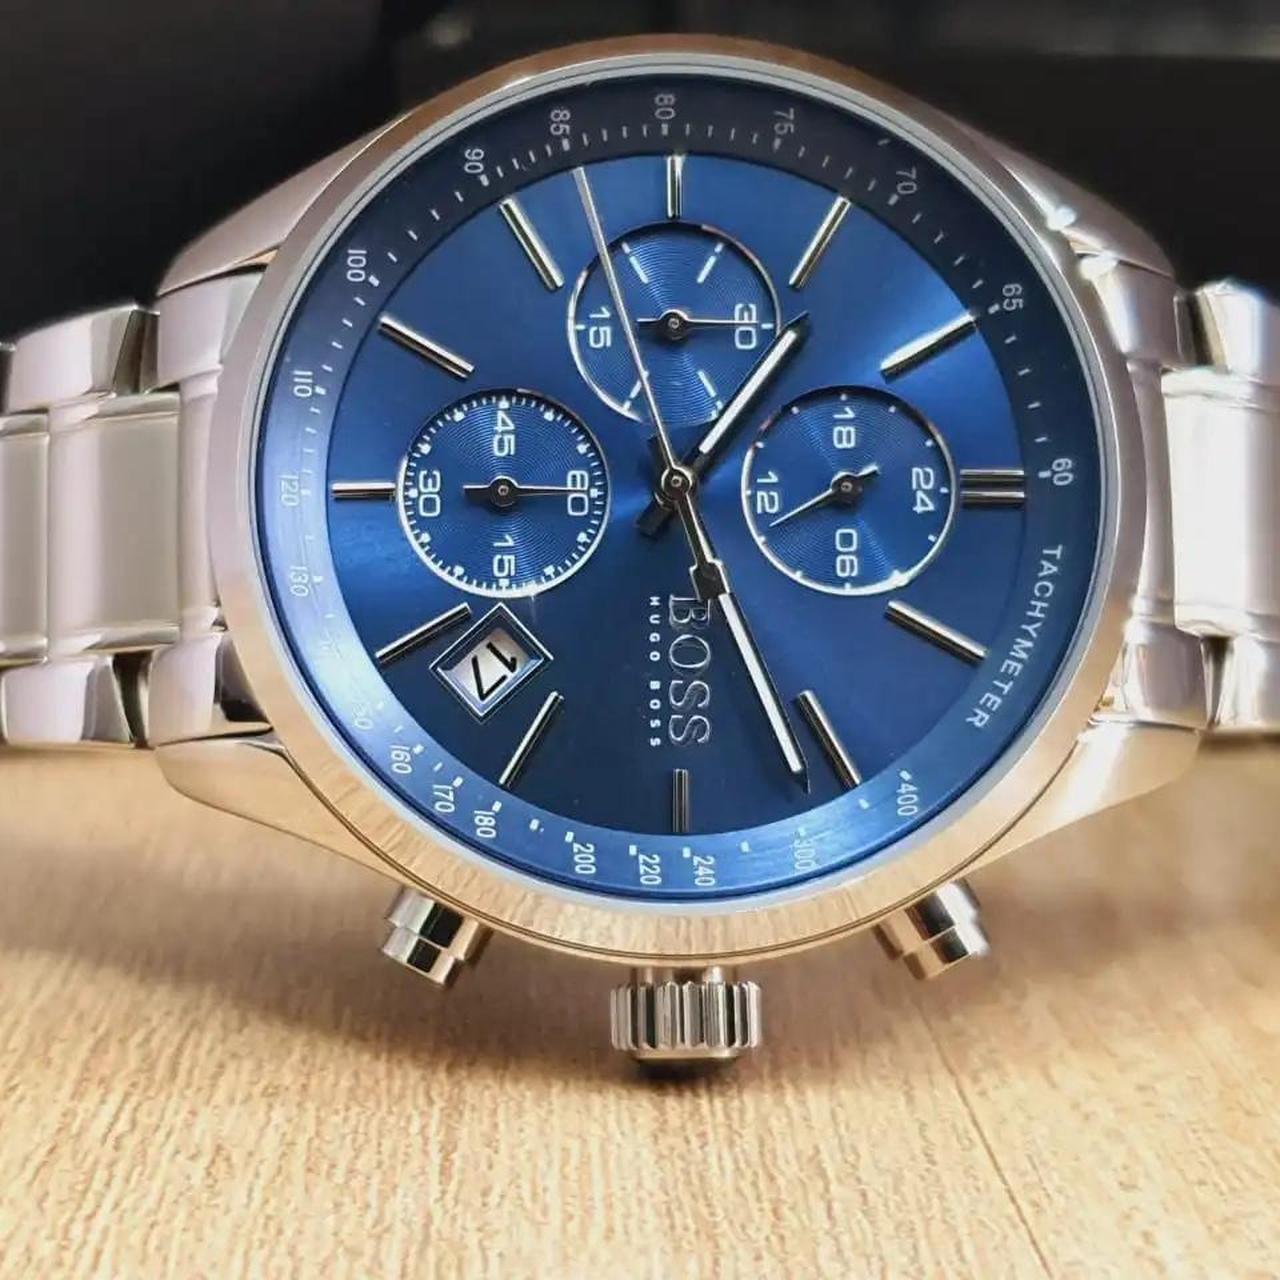 Brand new Hugo Boss watch. This watch is brand new... - Depop